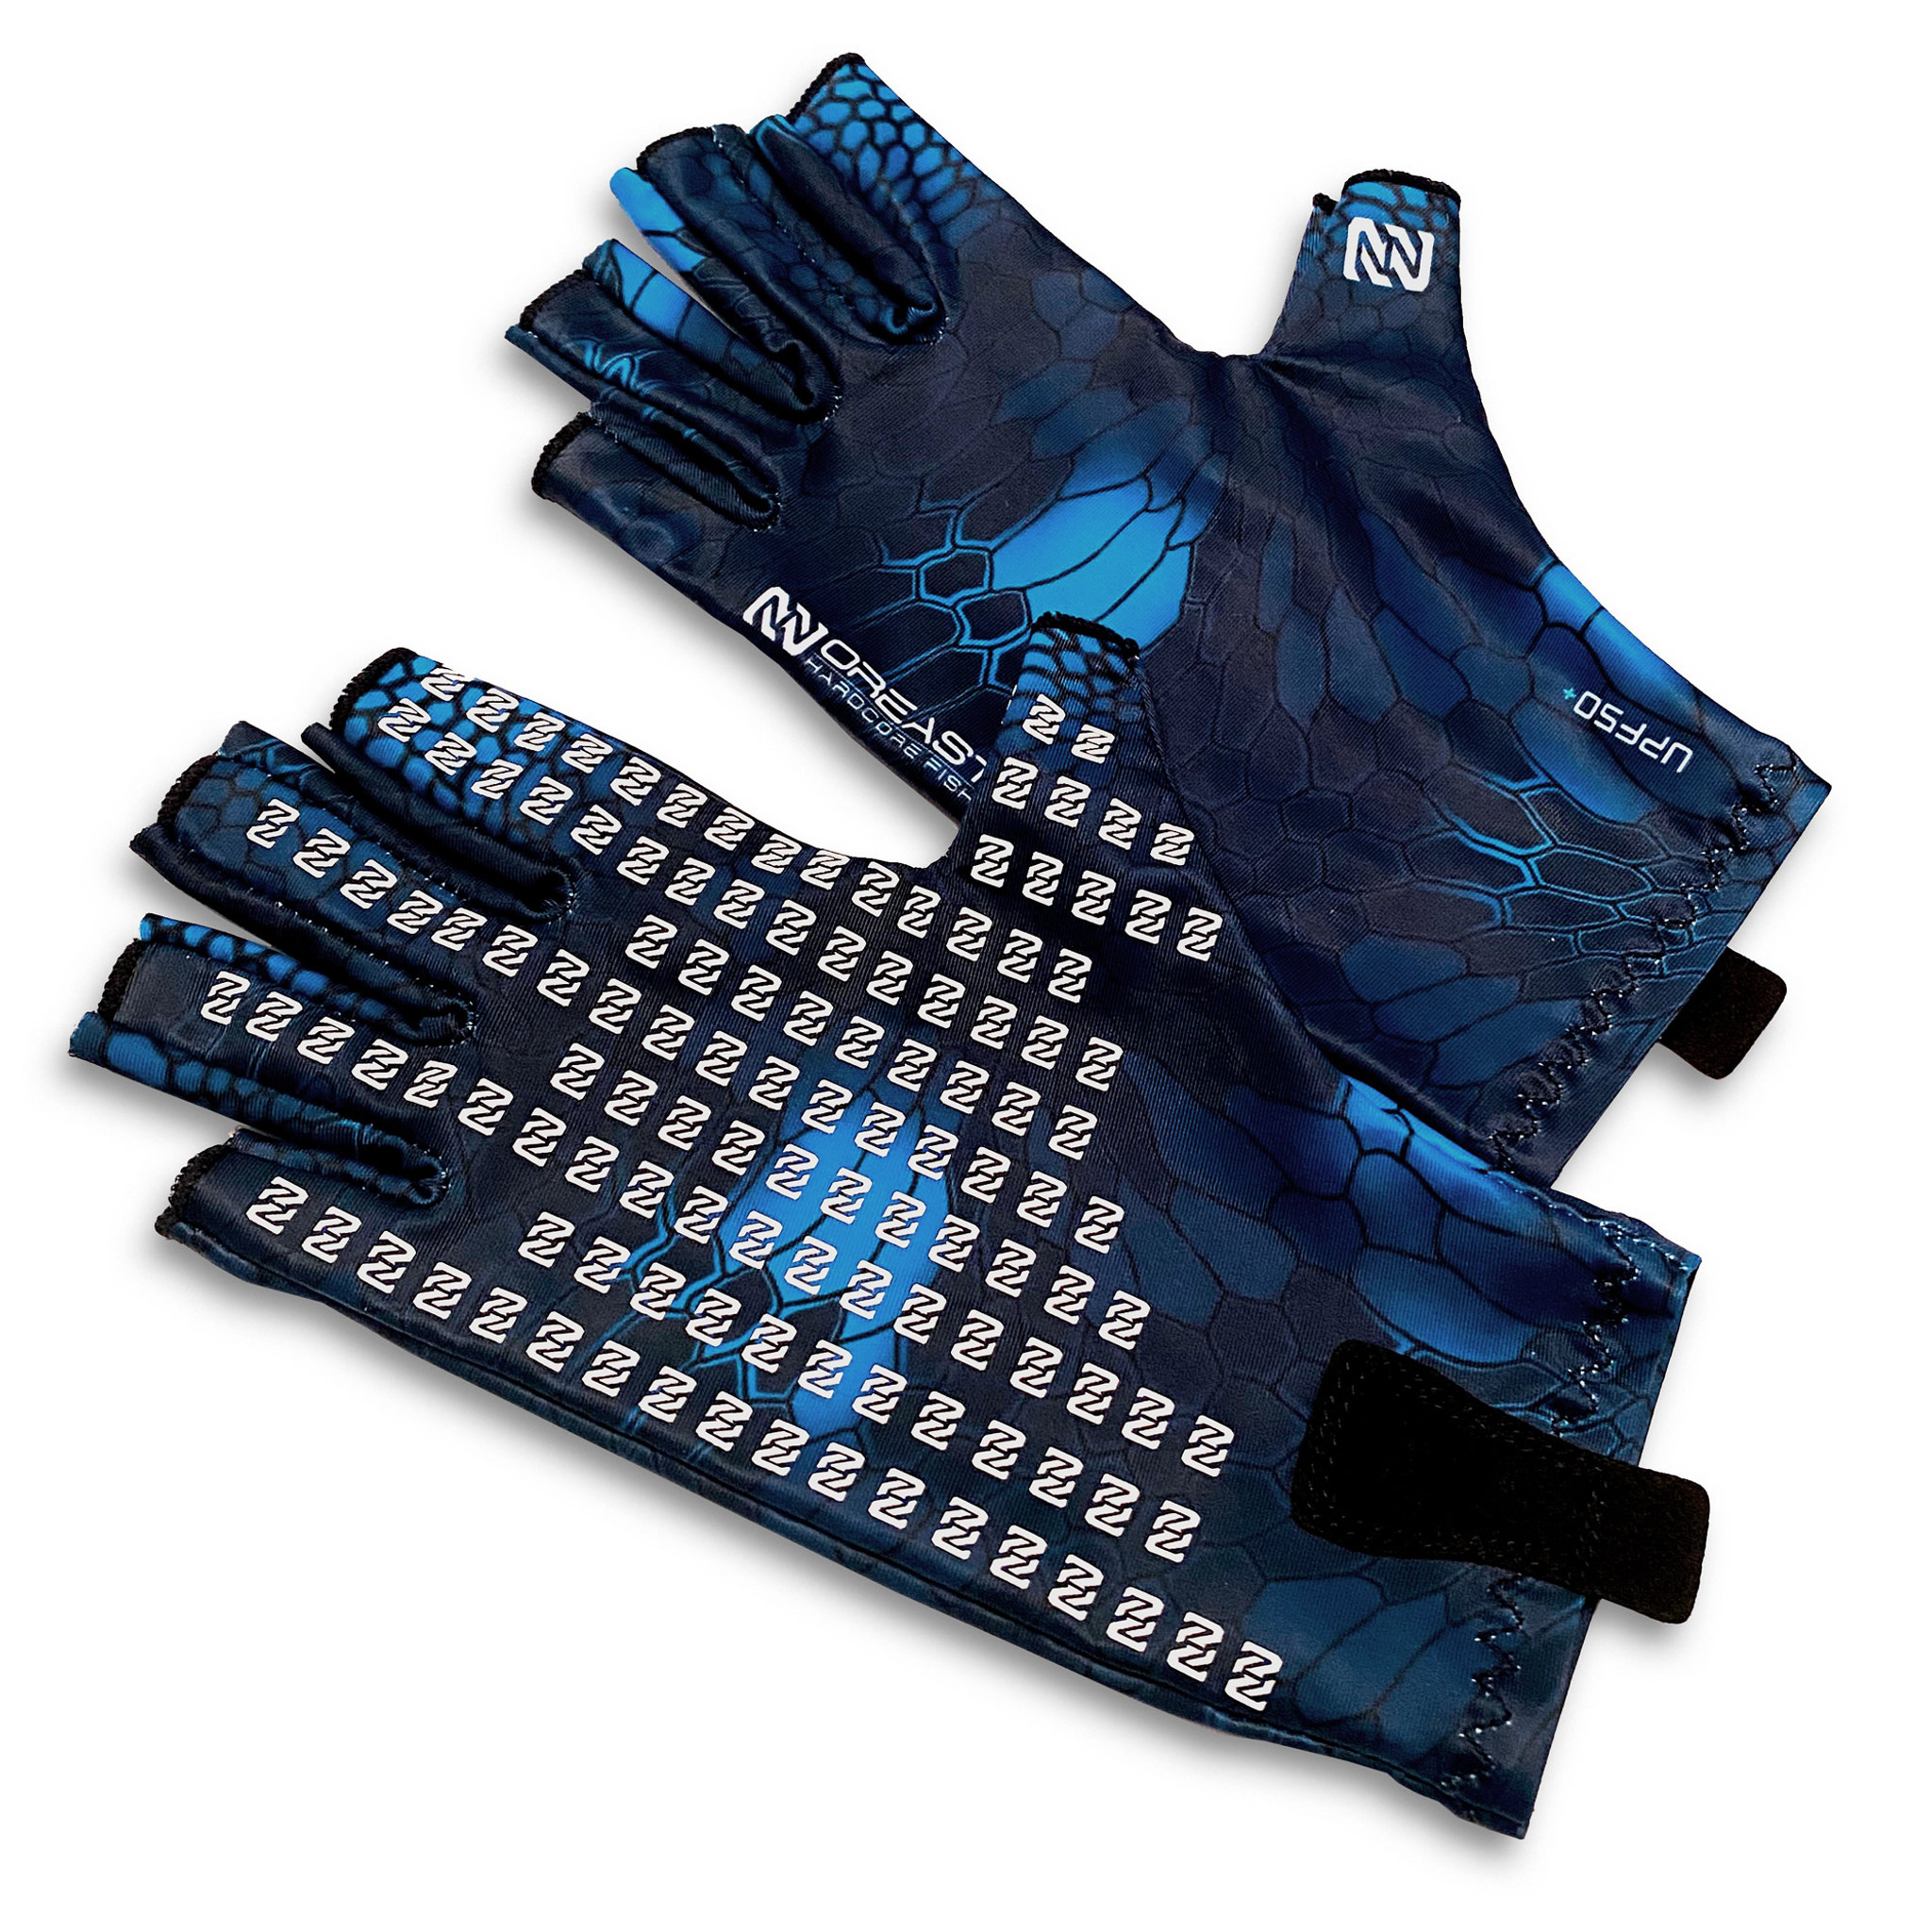 Pelagic Sun Protection Gloves, Fish Camo Slate Blue / M/L